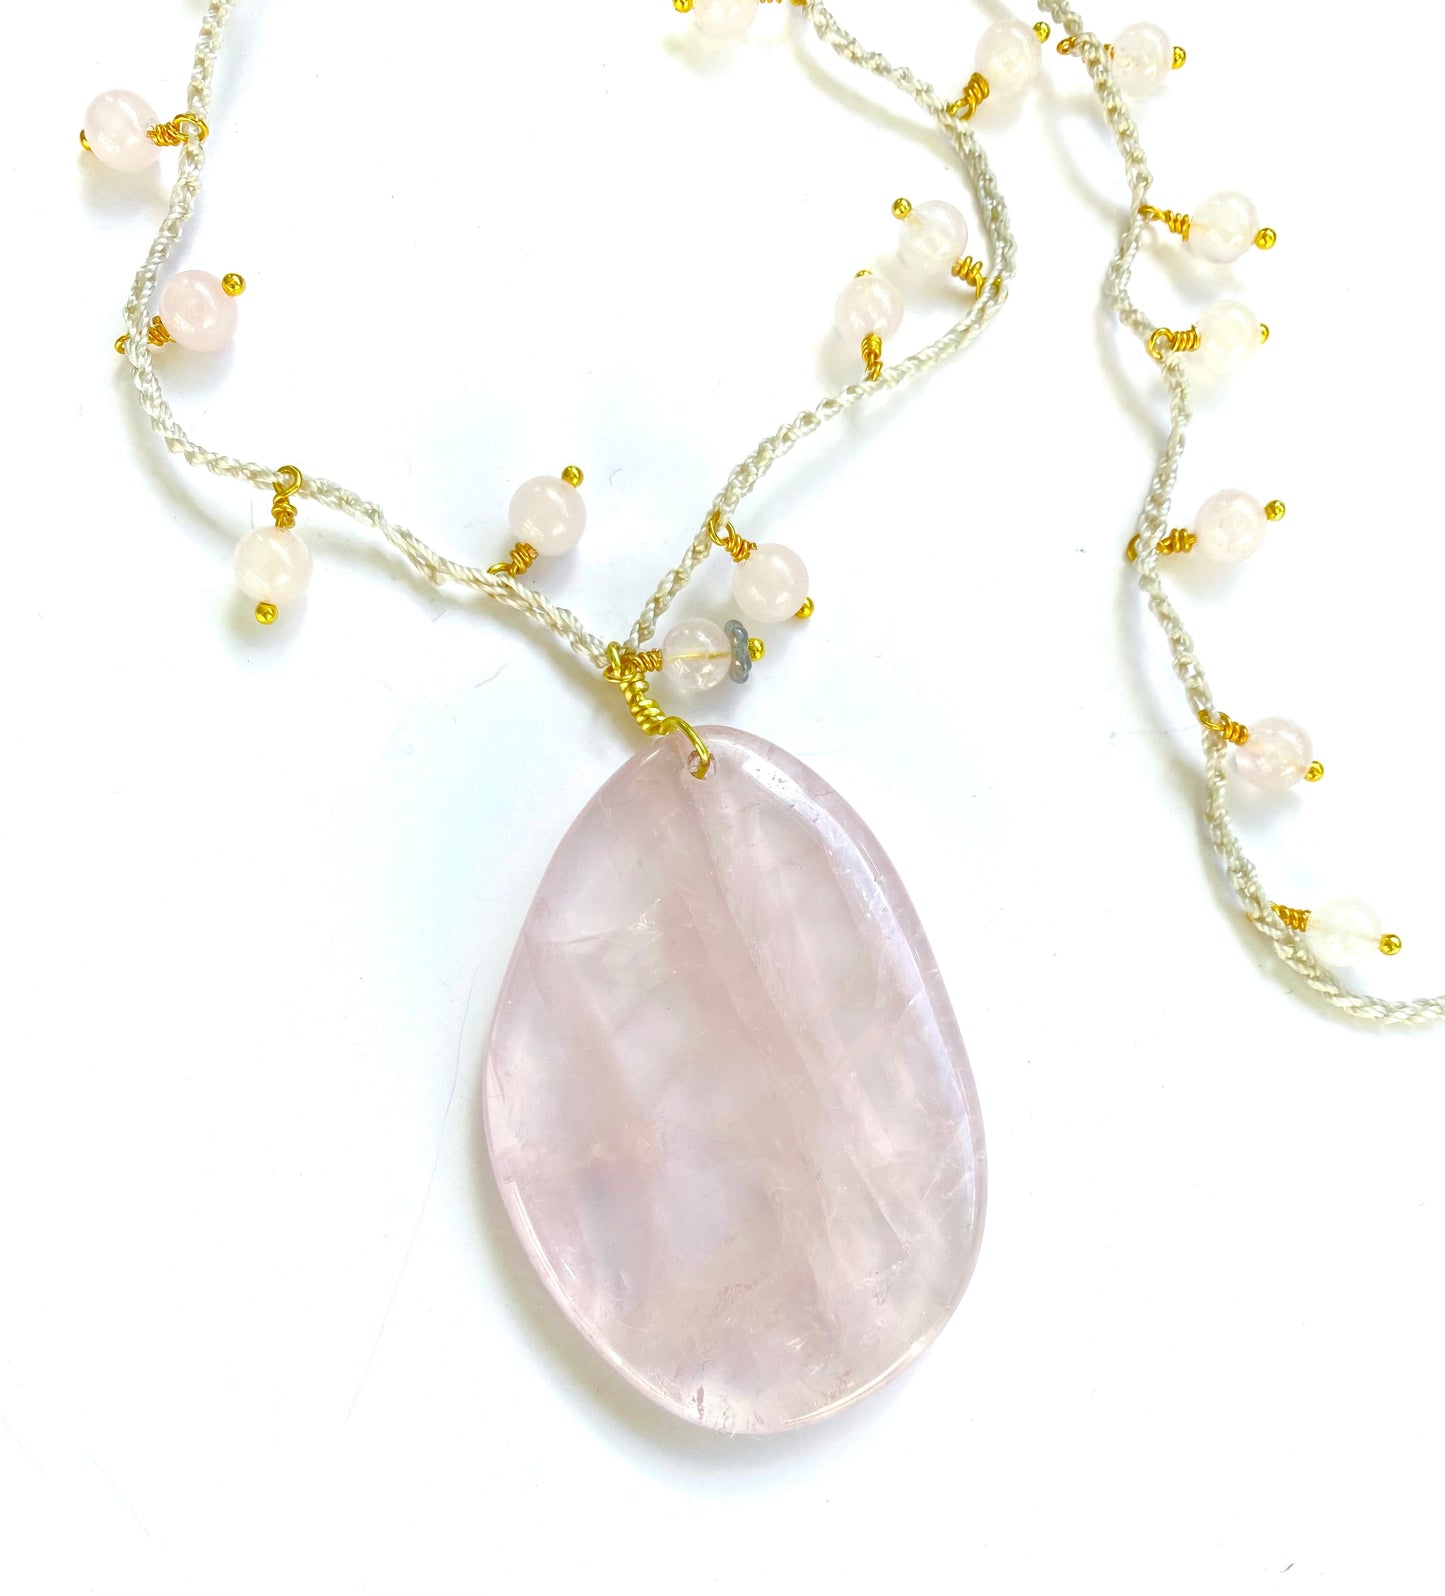 Rose quartz with hand crochet rose quartz beads necklaces